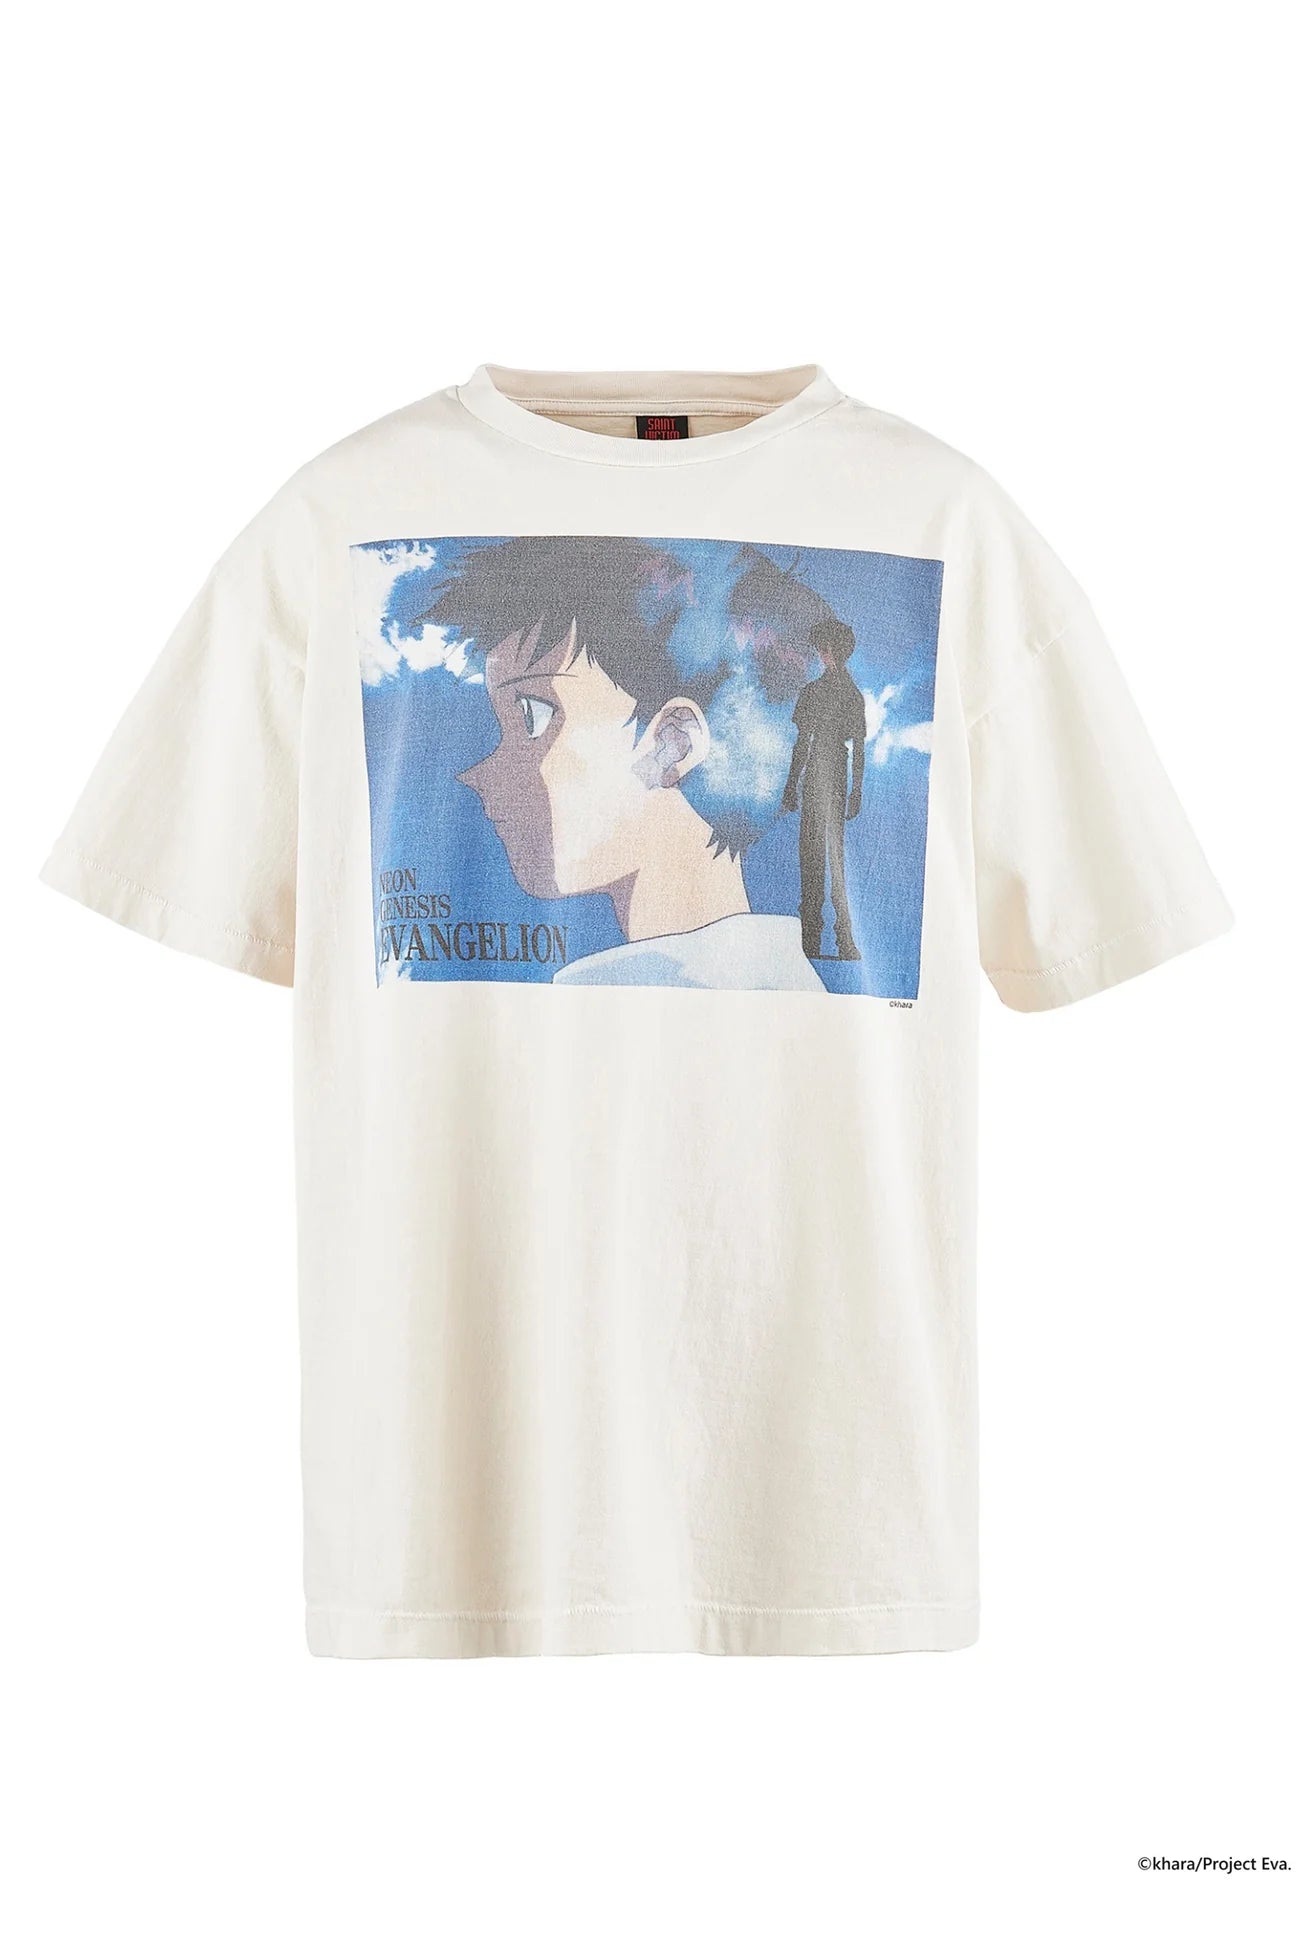 Saint Michael x Neon Genesis Evangelion Shinji Tee White - Supra marlin Sneakers